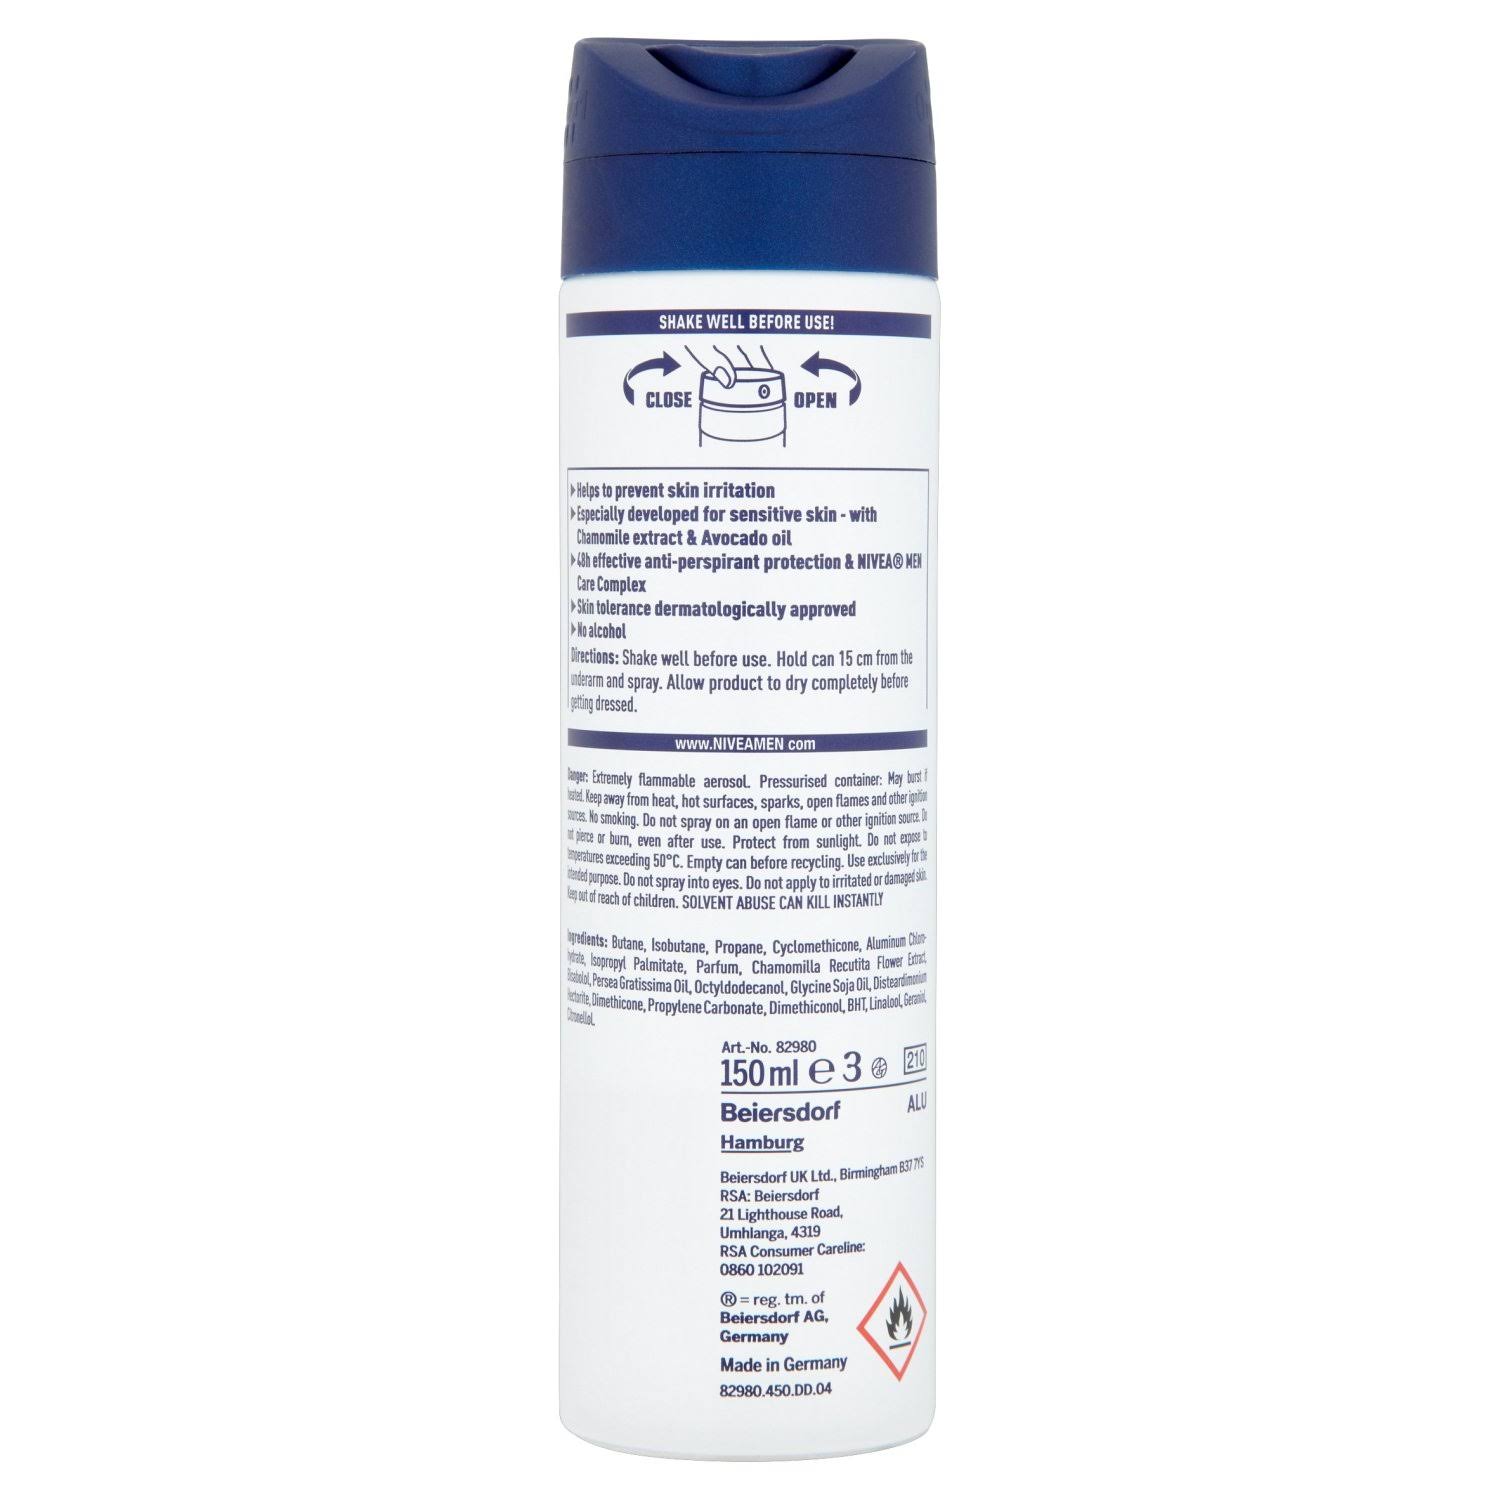 Nivea Men's Sensitive Protect Spray - 150ml